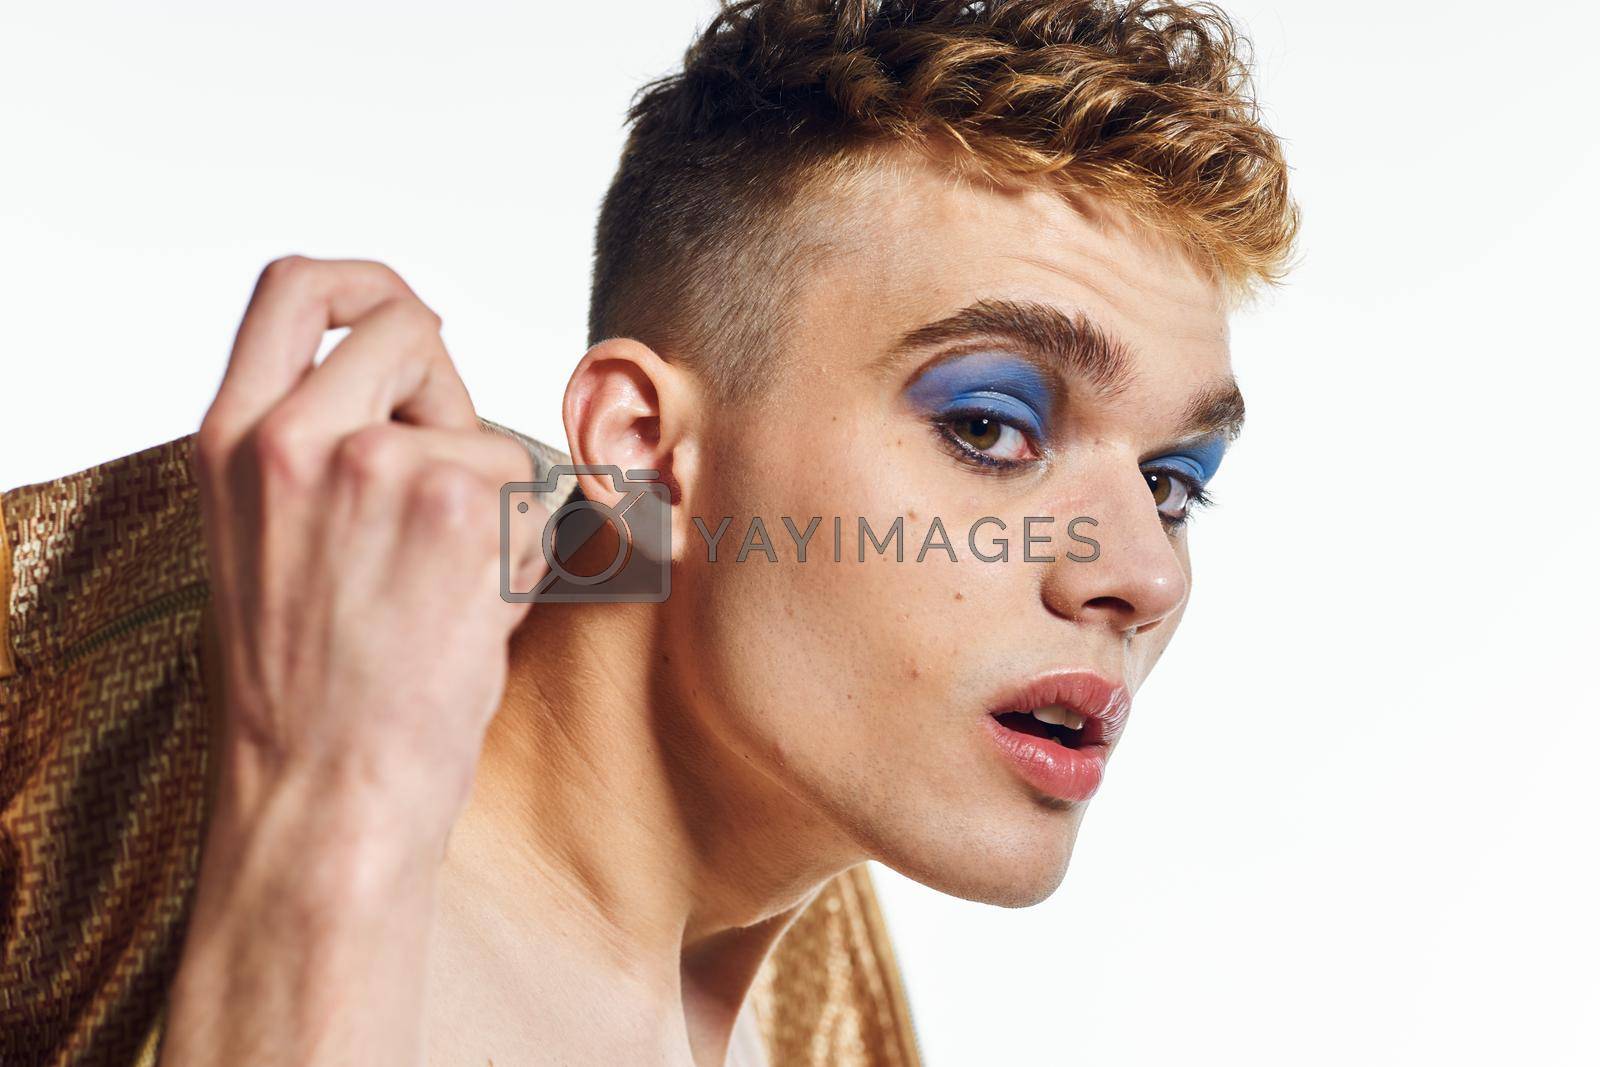 male transgender female makeup fashion posing studio. High quality photo